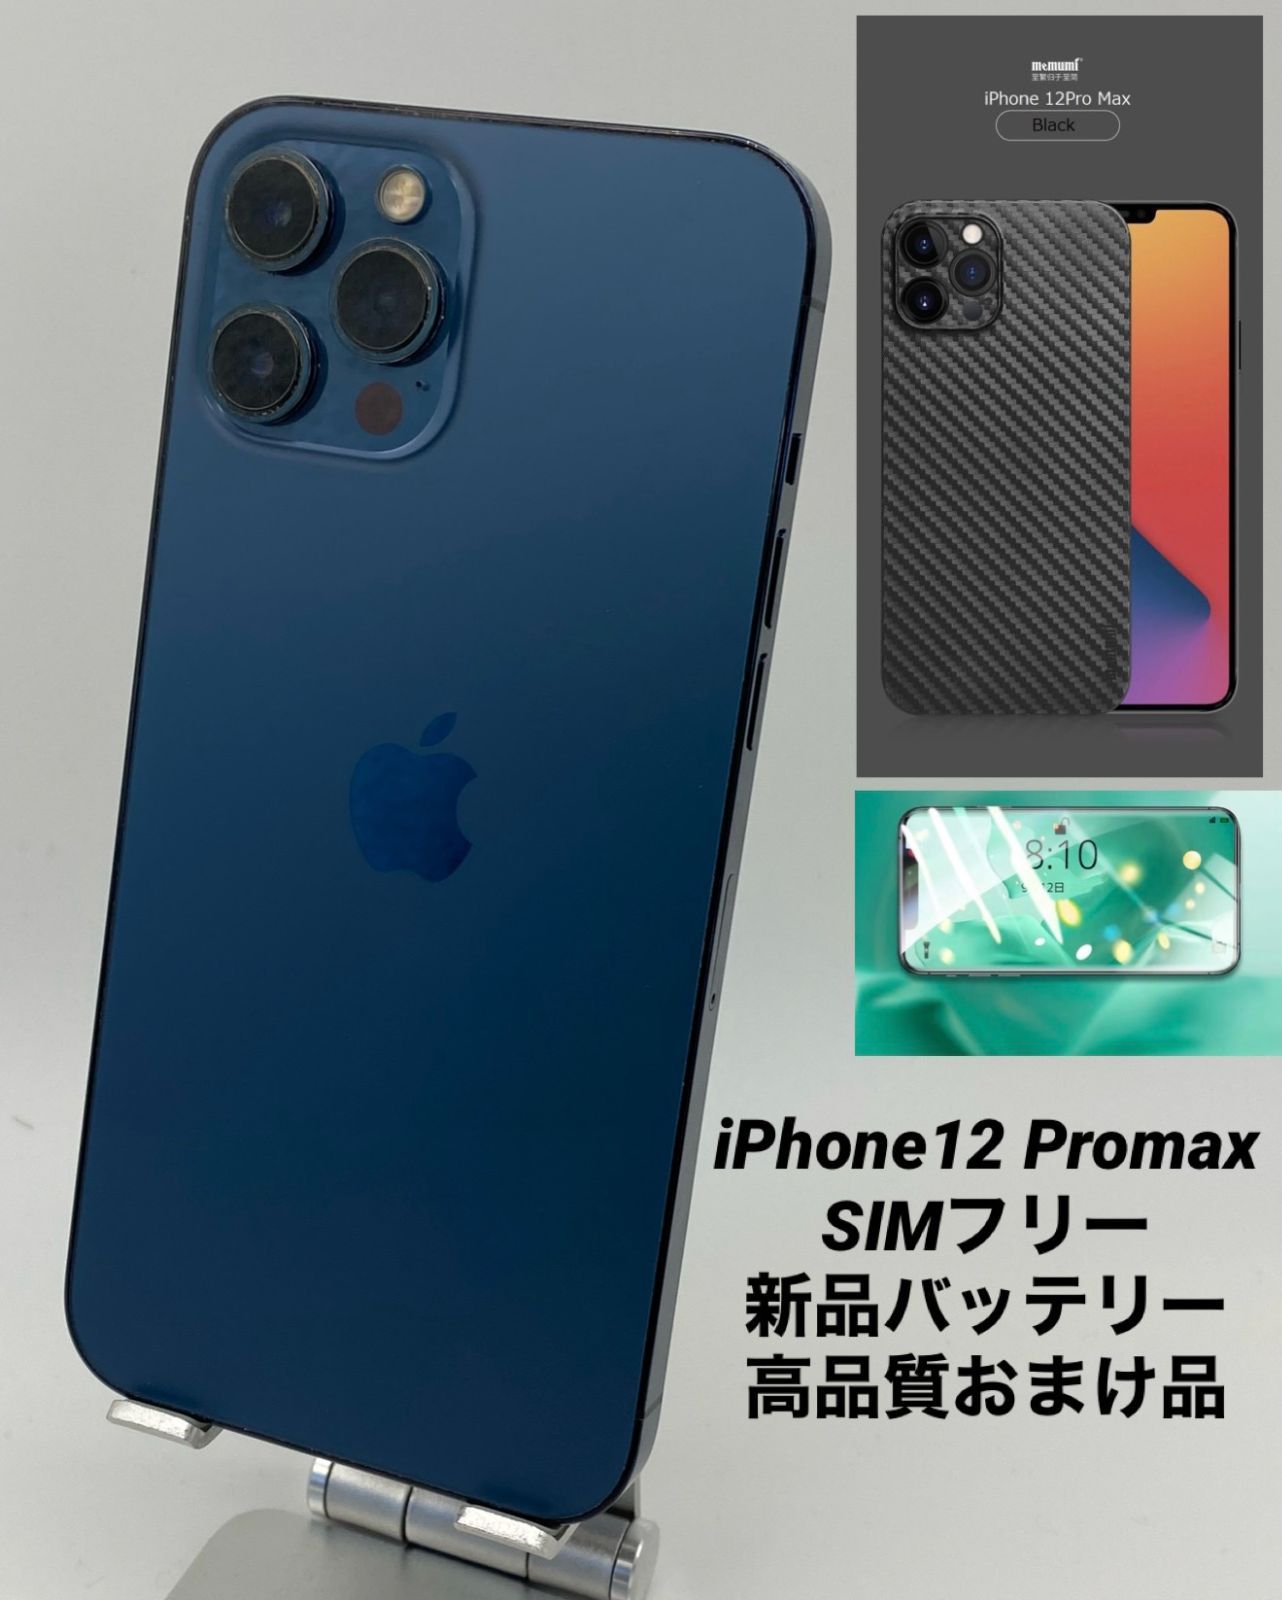 iPhone 12 Pro Max paci.ブルー 256 GB SIMフリー - スマートフォン本体